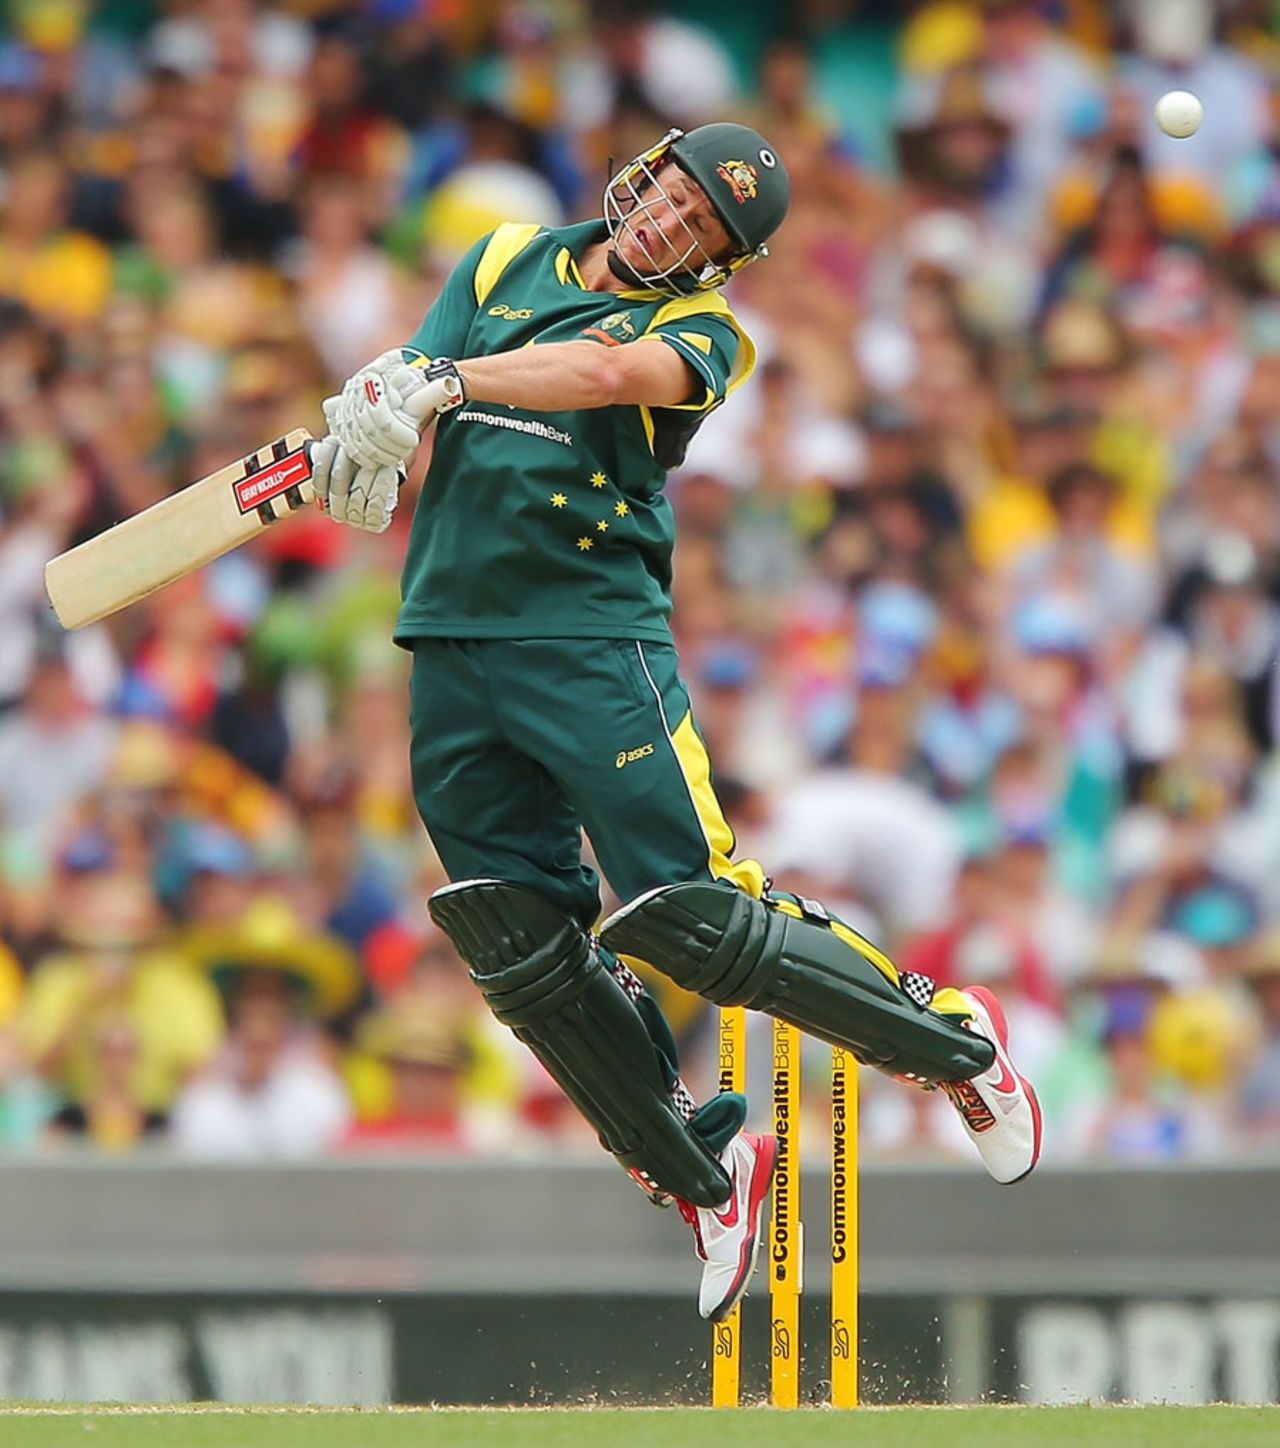 David Hussey evades a short ball, Australia v Sri Lanka, 4th ODI, Sydney, January 20, 2013